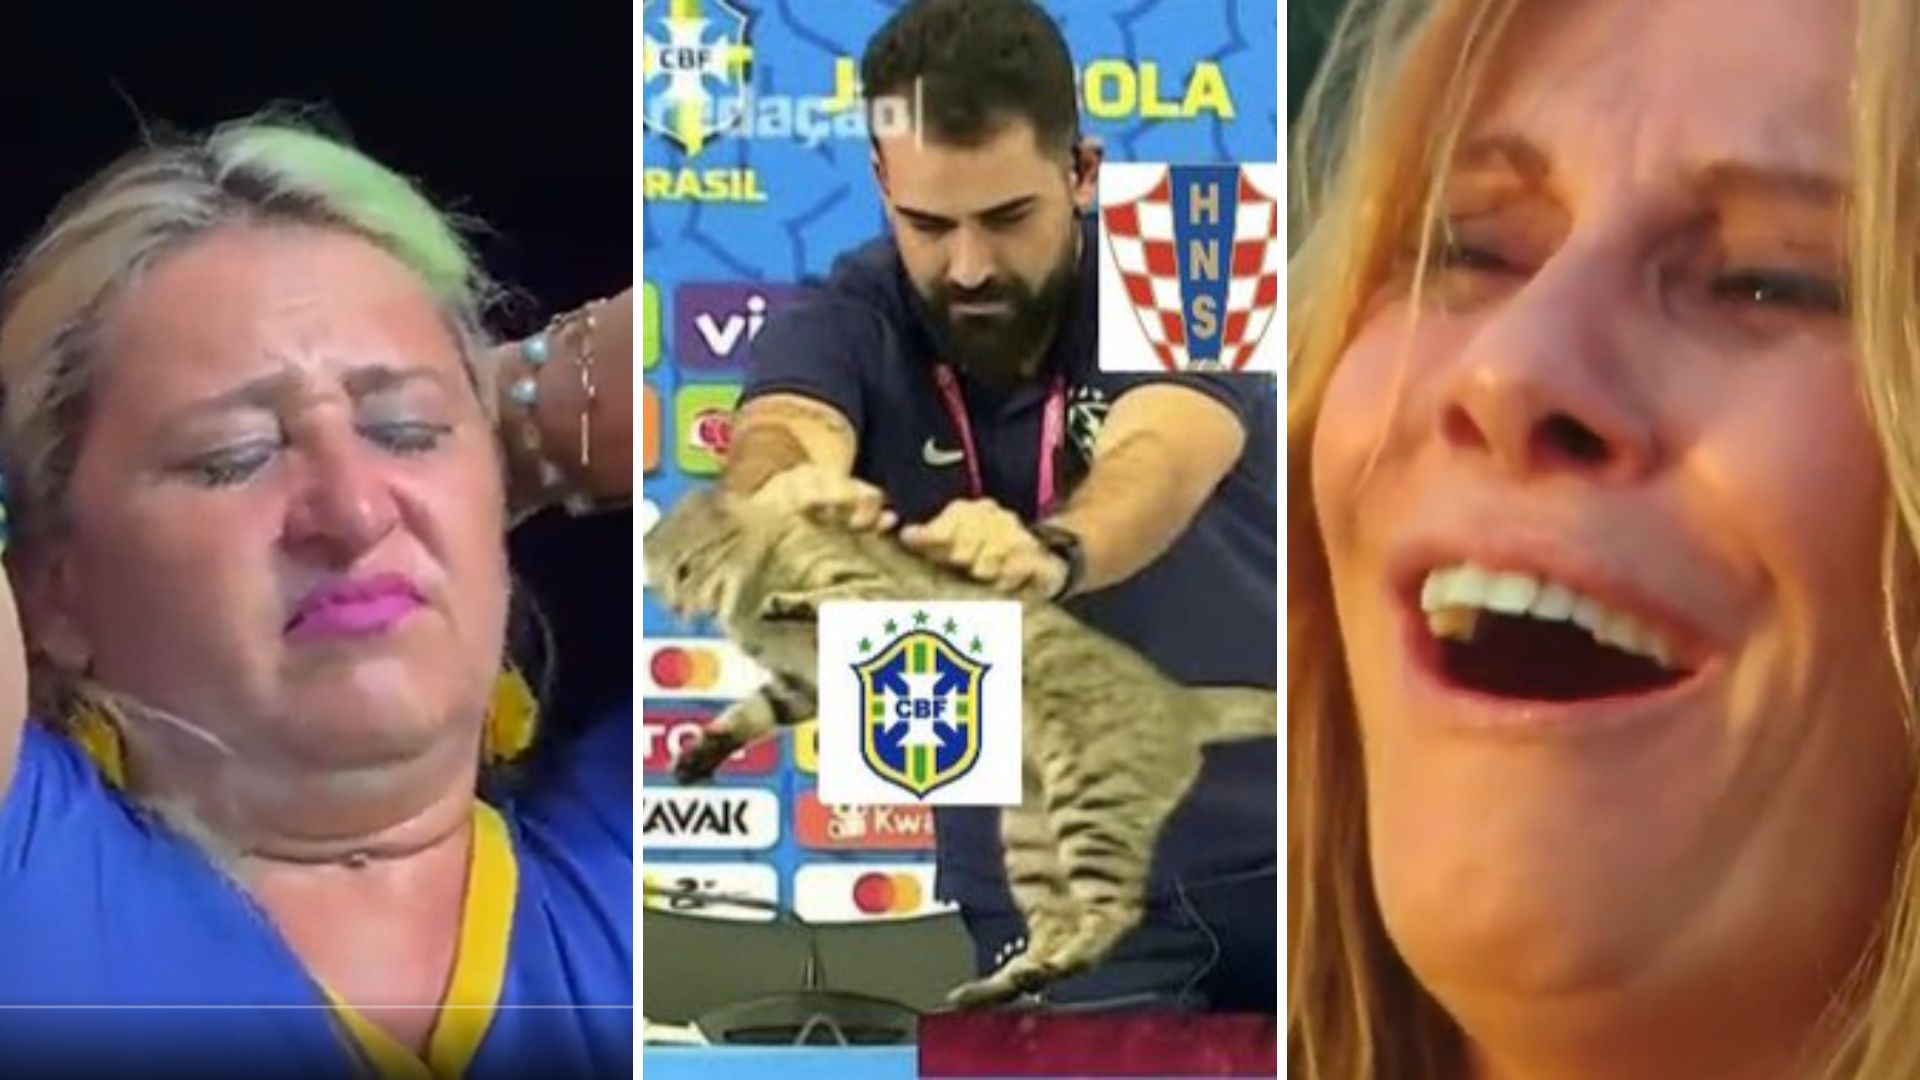 HZ, Derrota do Brasil na Copa do Catar garante memes na internet; confira